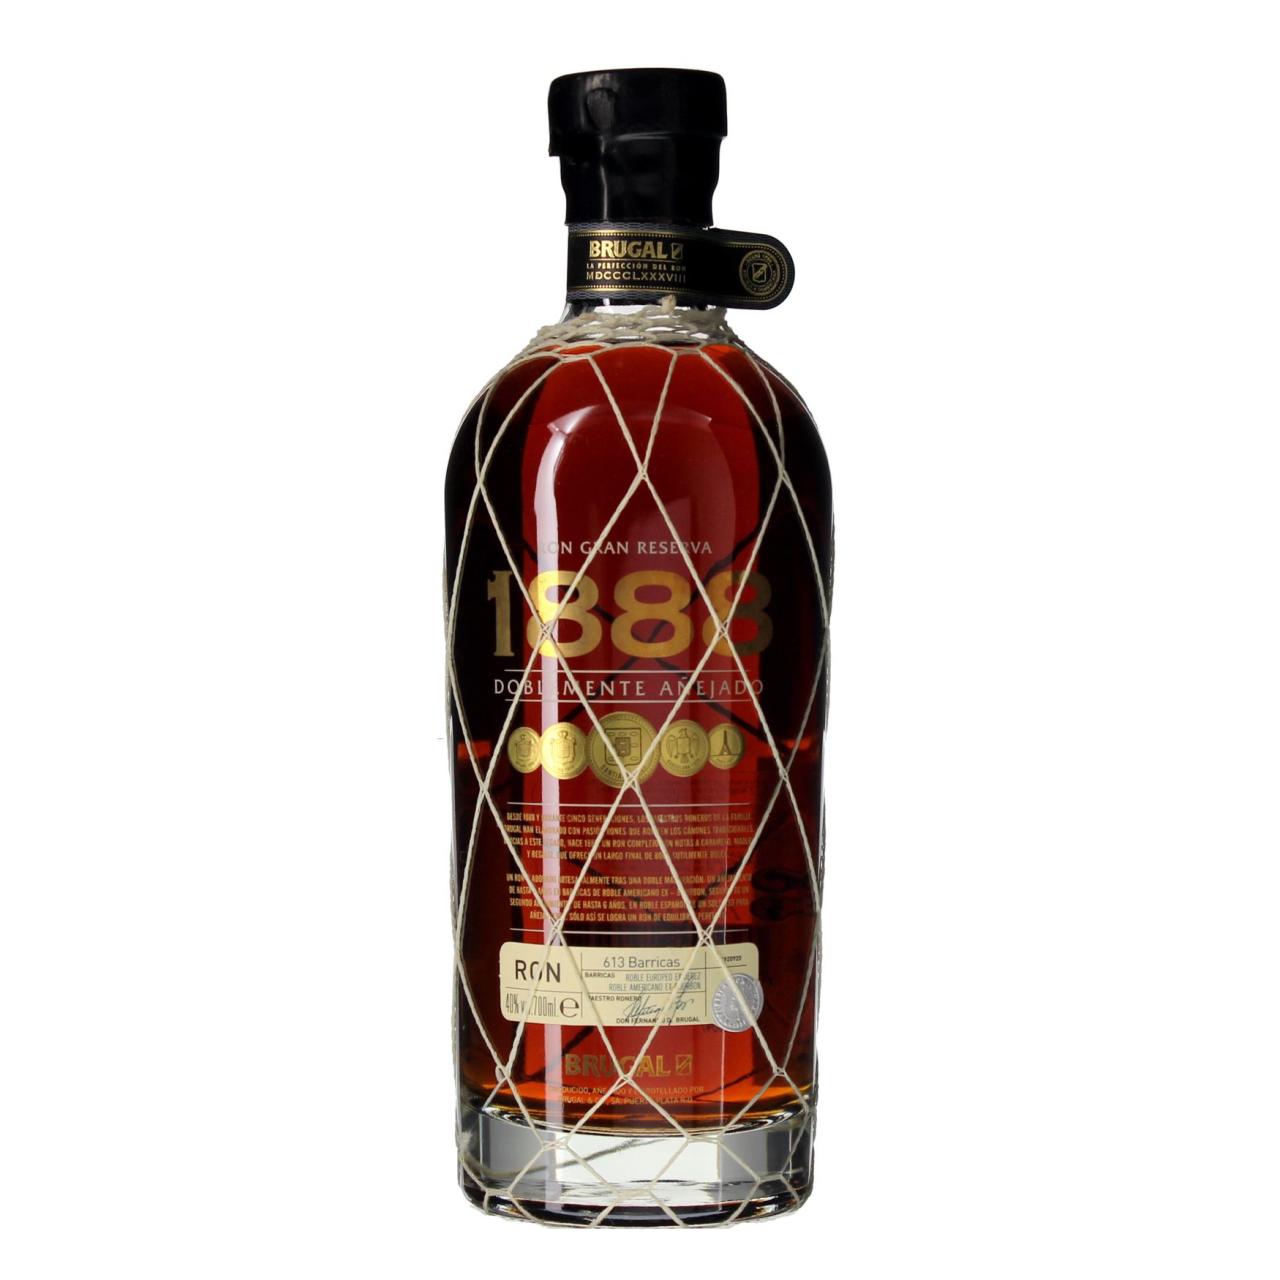 Brugal Rum1888 40% 0,7l